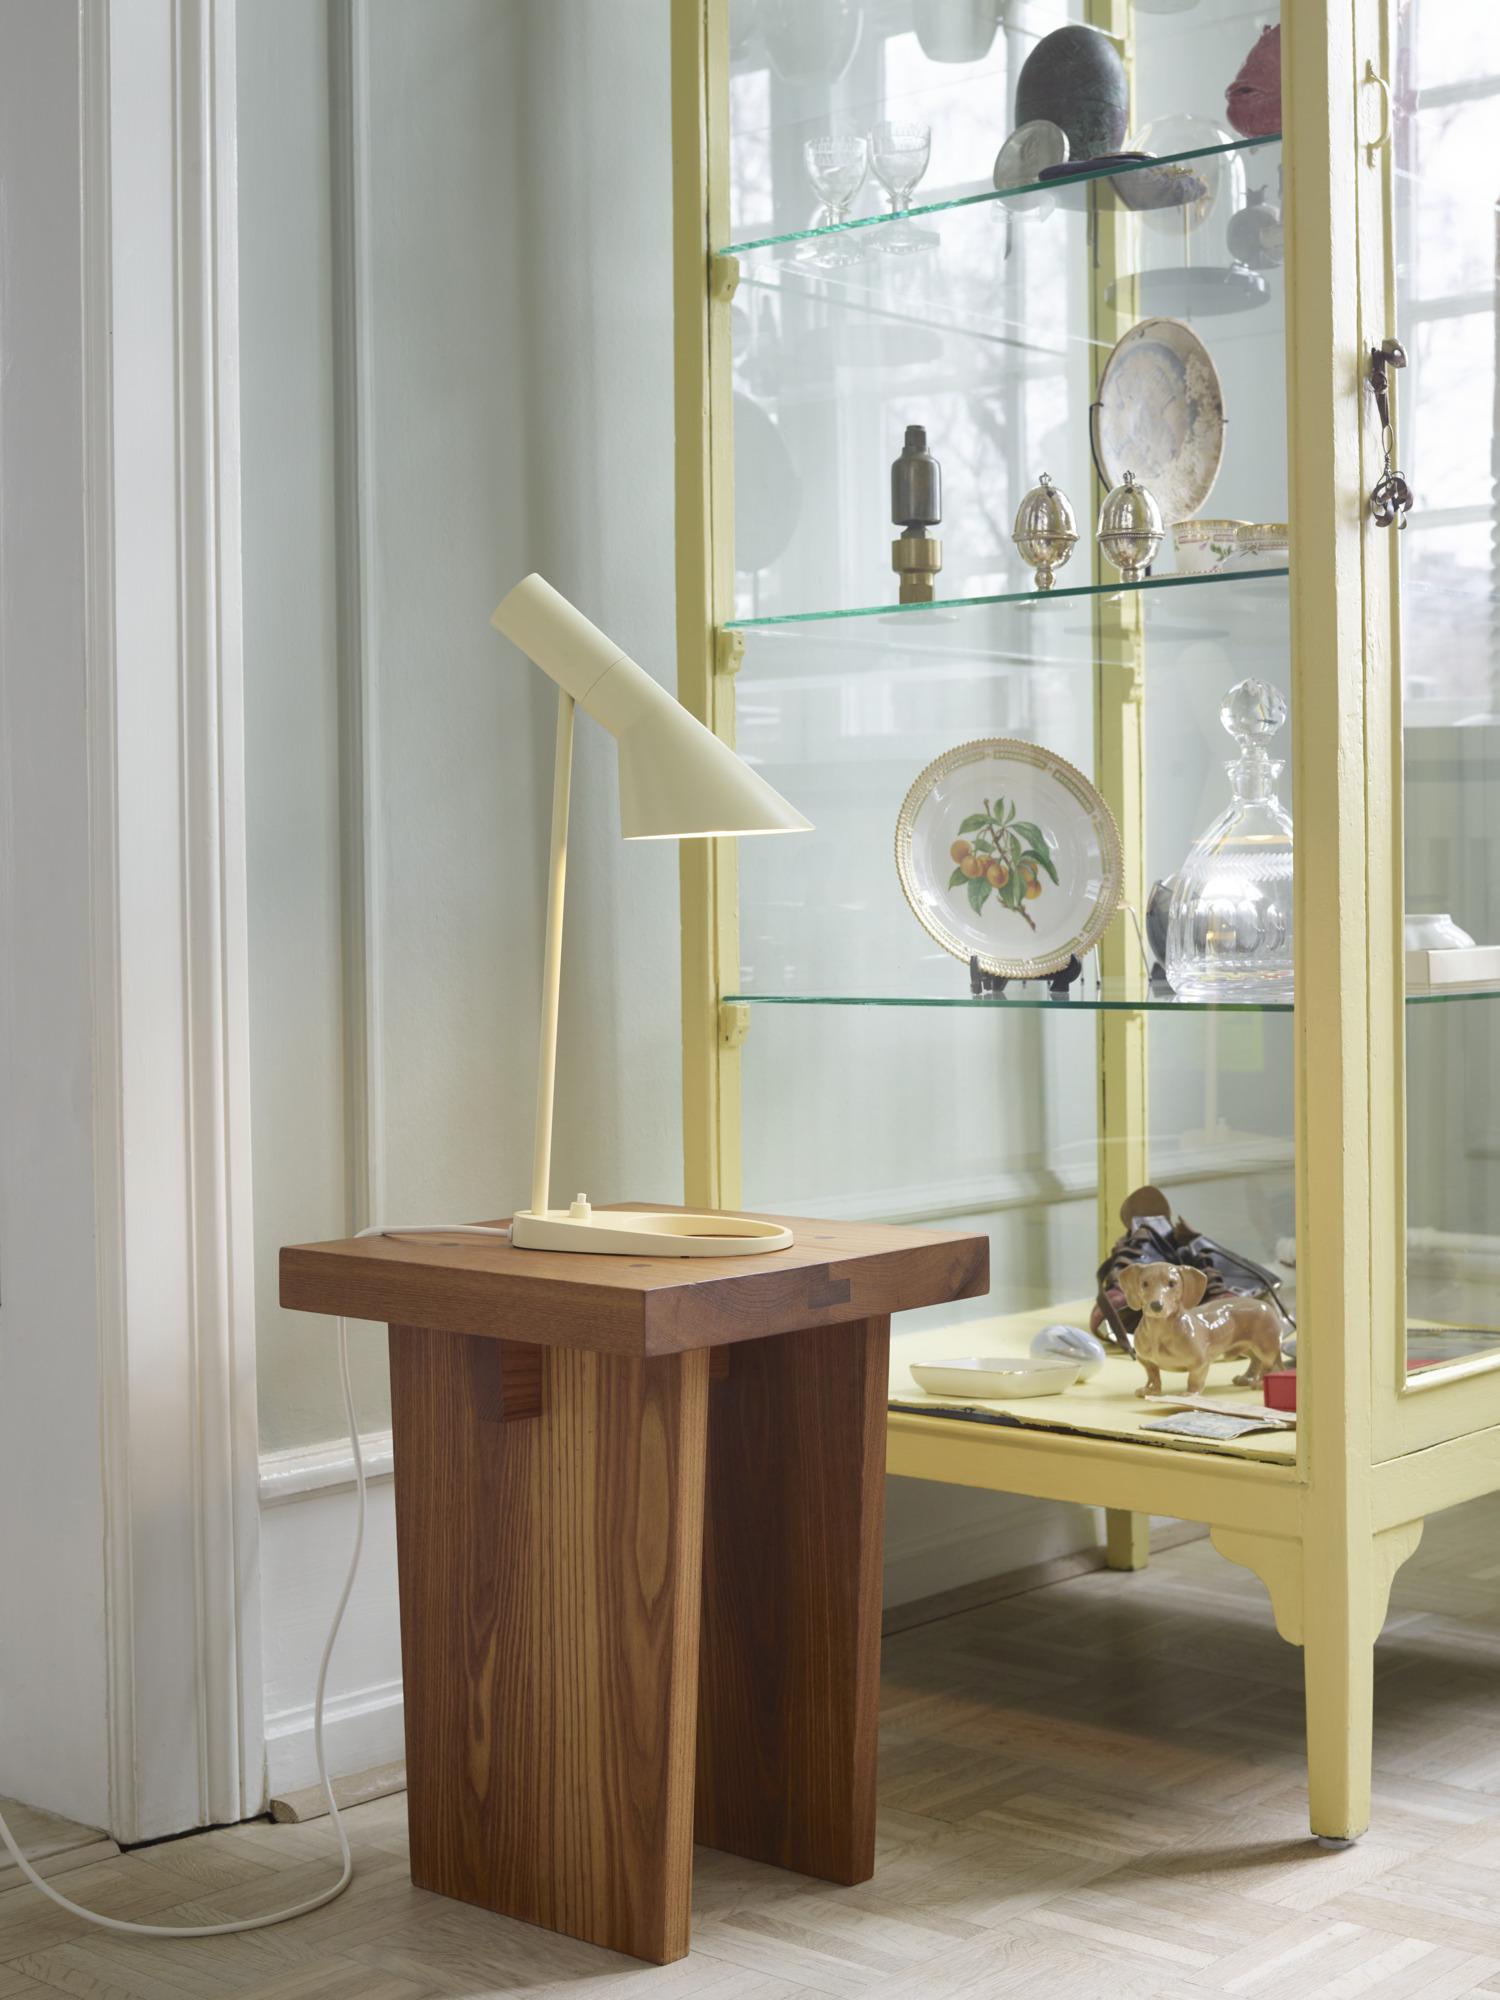 Arne Jacobsen 'Aj Mini' Table Lamp in Electric Orange for Louis Poulsen For Sale 2